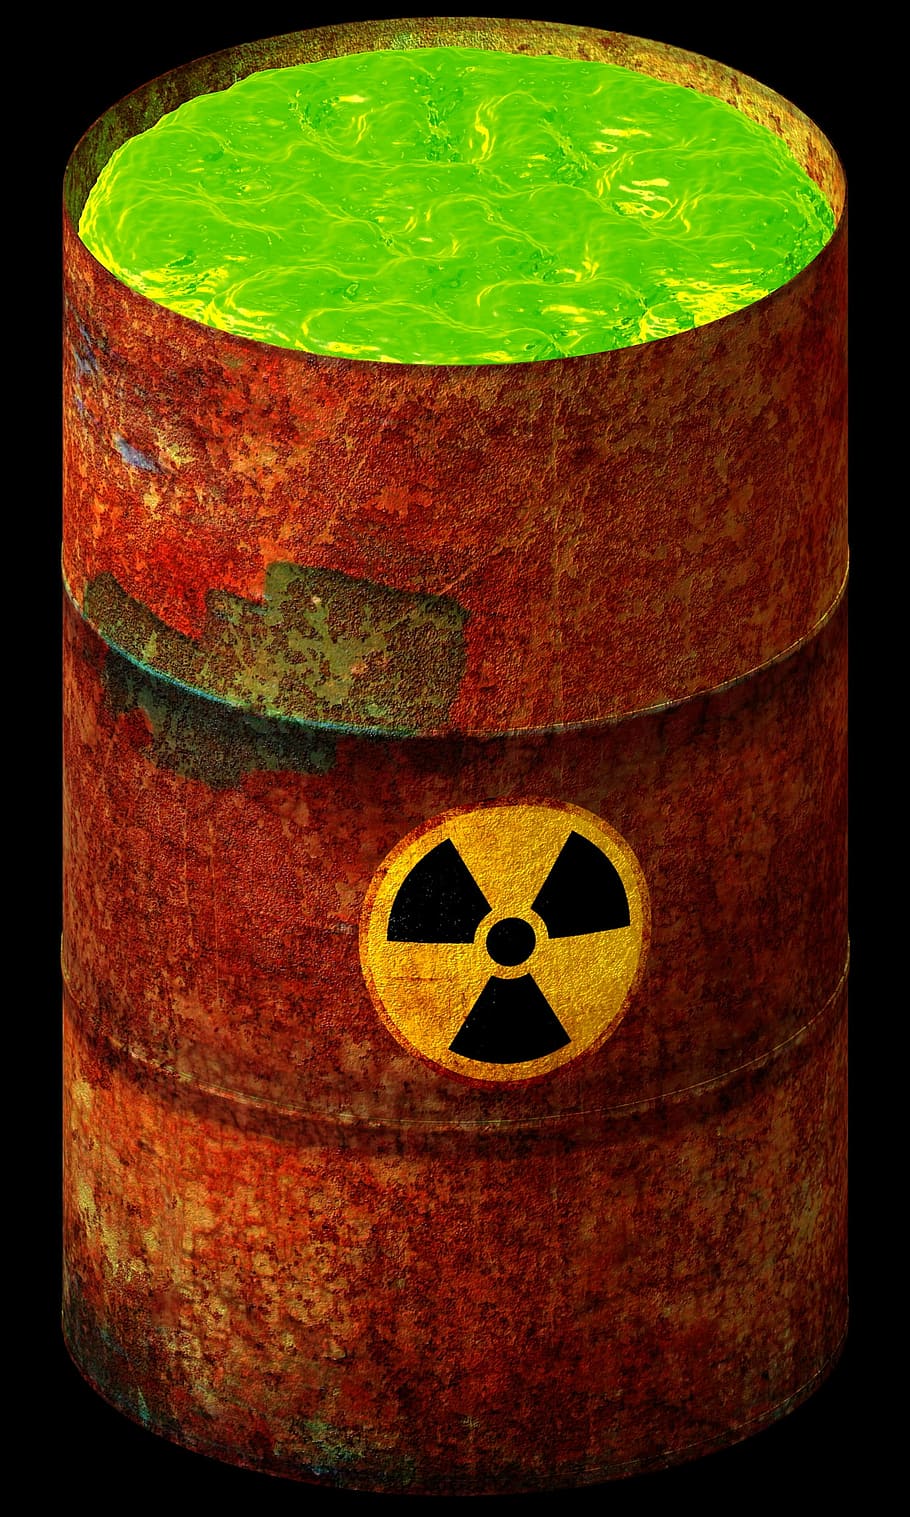 tambor marrón oxidado, nuclear, residuos, radiactivo, tóxico, peligro, radiación, medio ambiente, contaminación, ecología